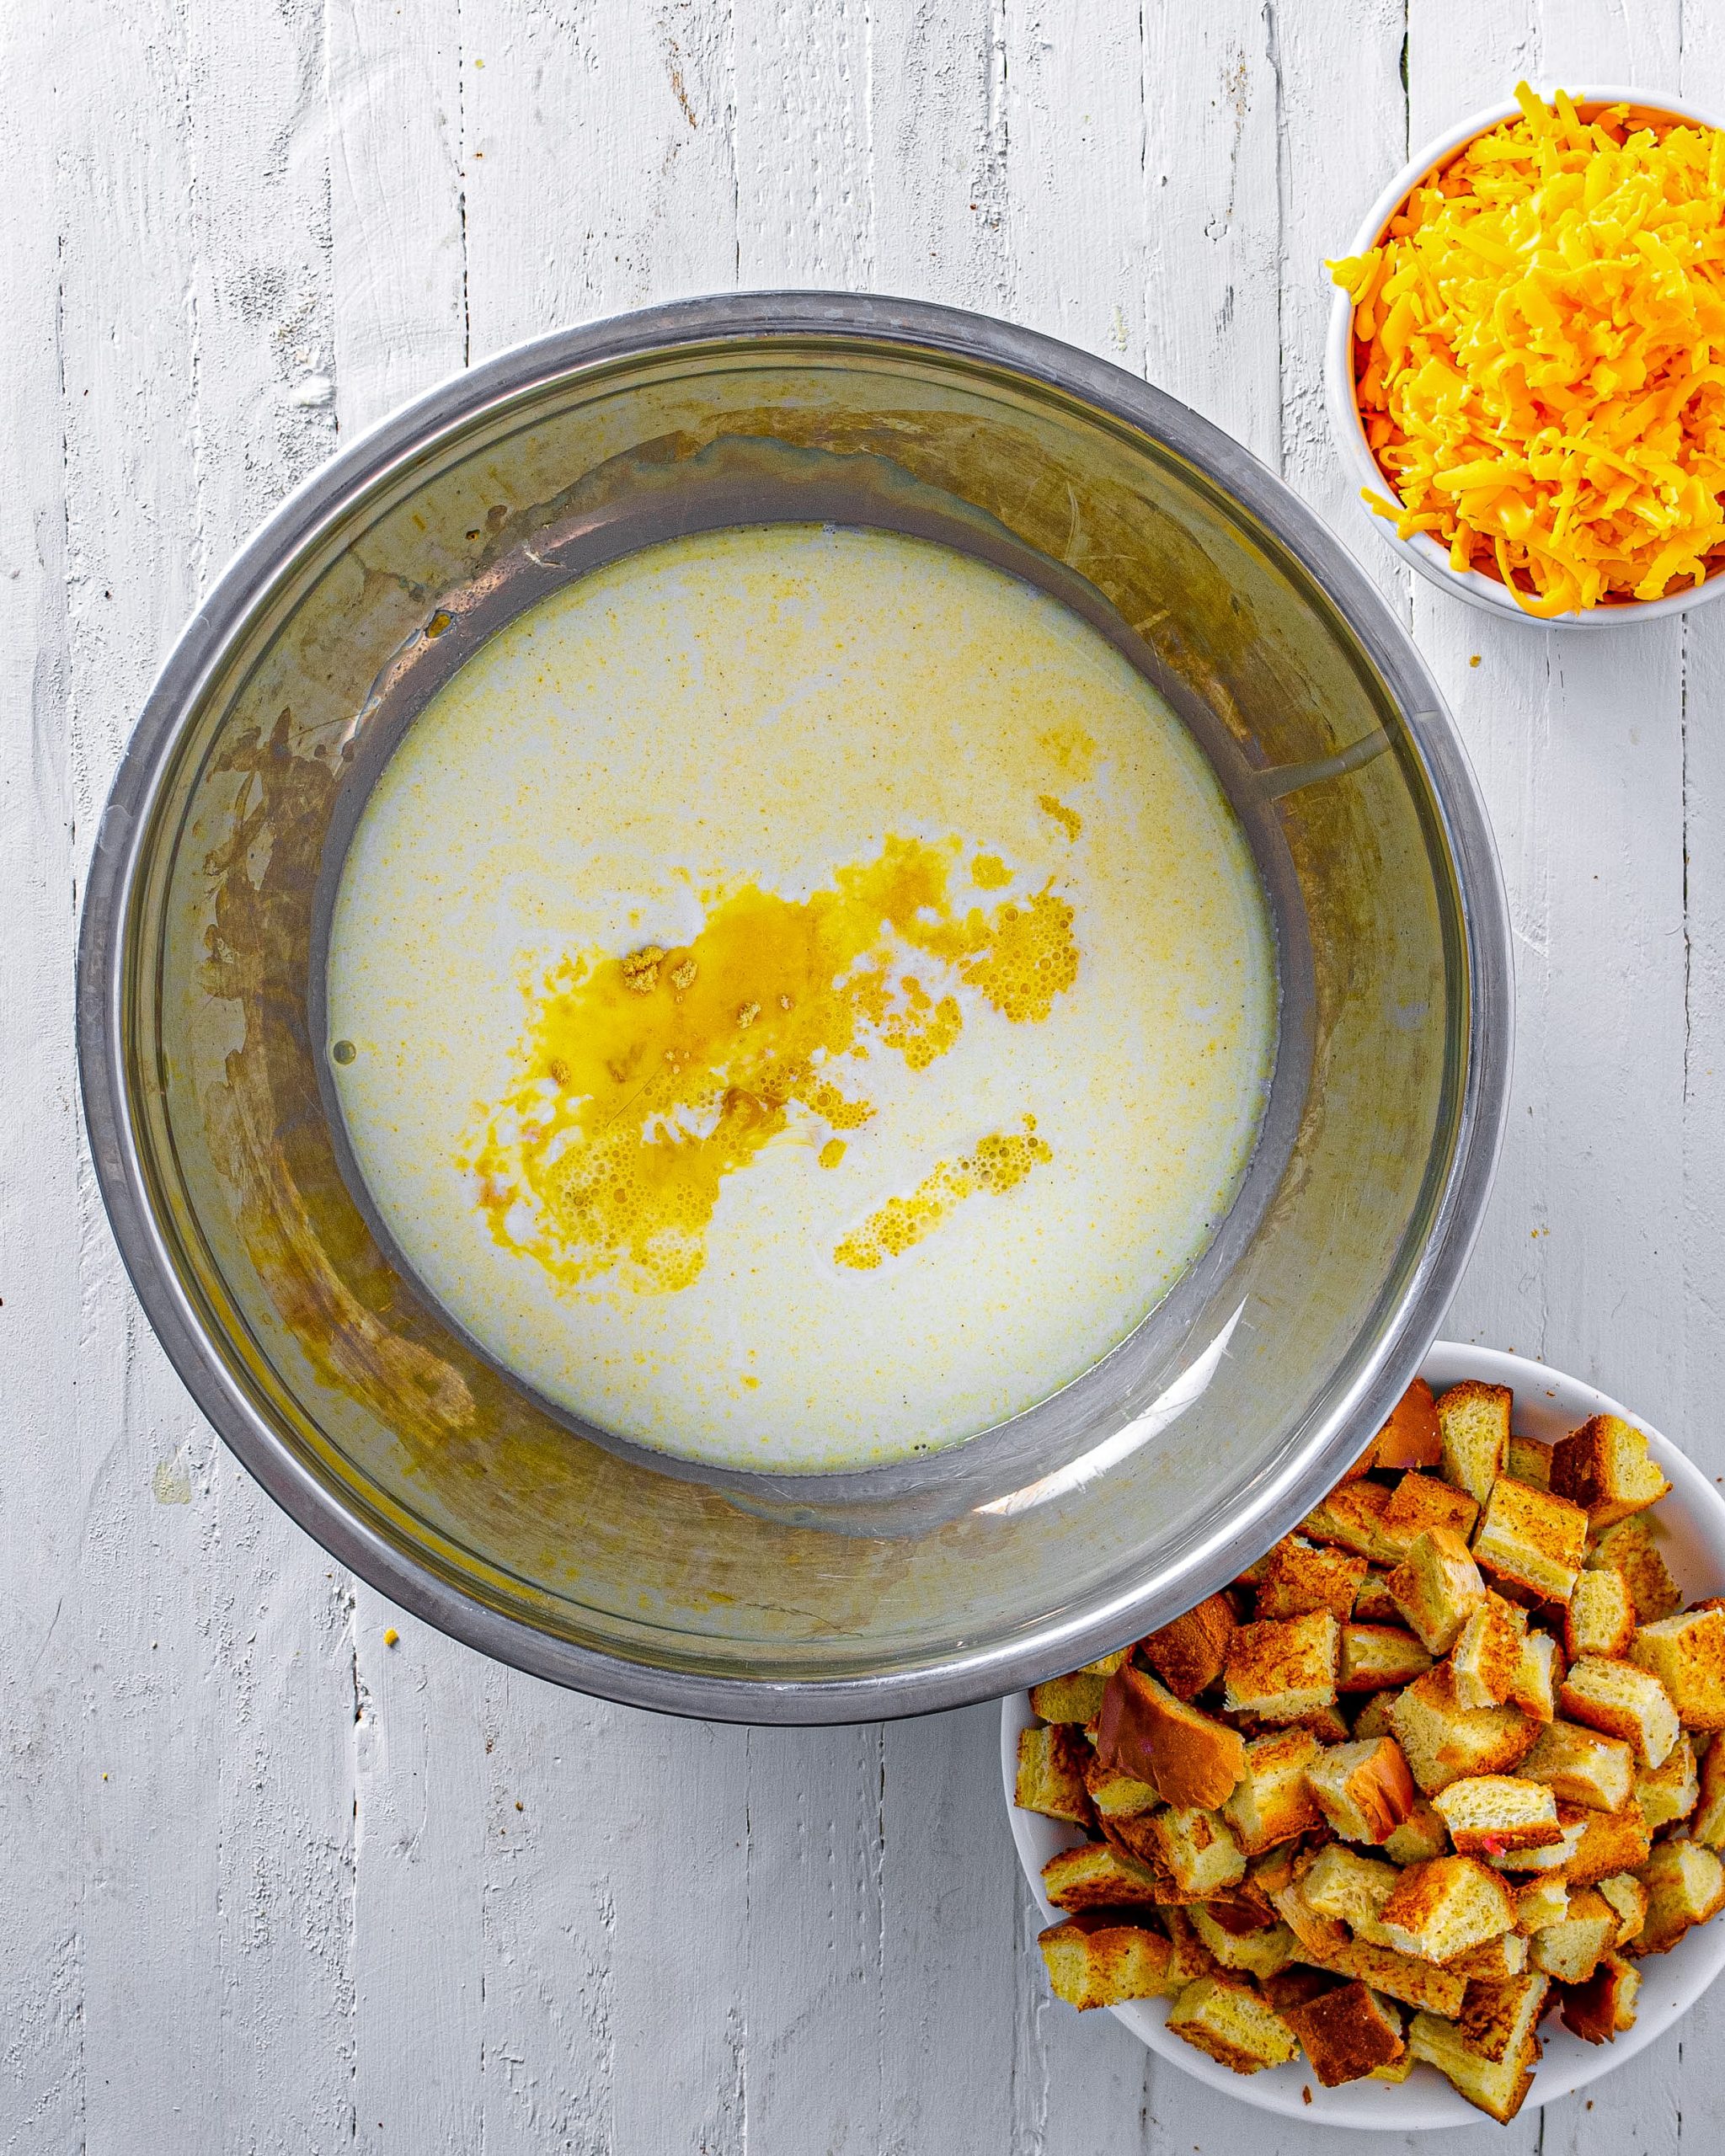 In a medium bowl, mix together mustard powder, salt, eggs, and milk.